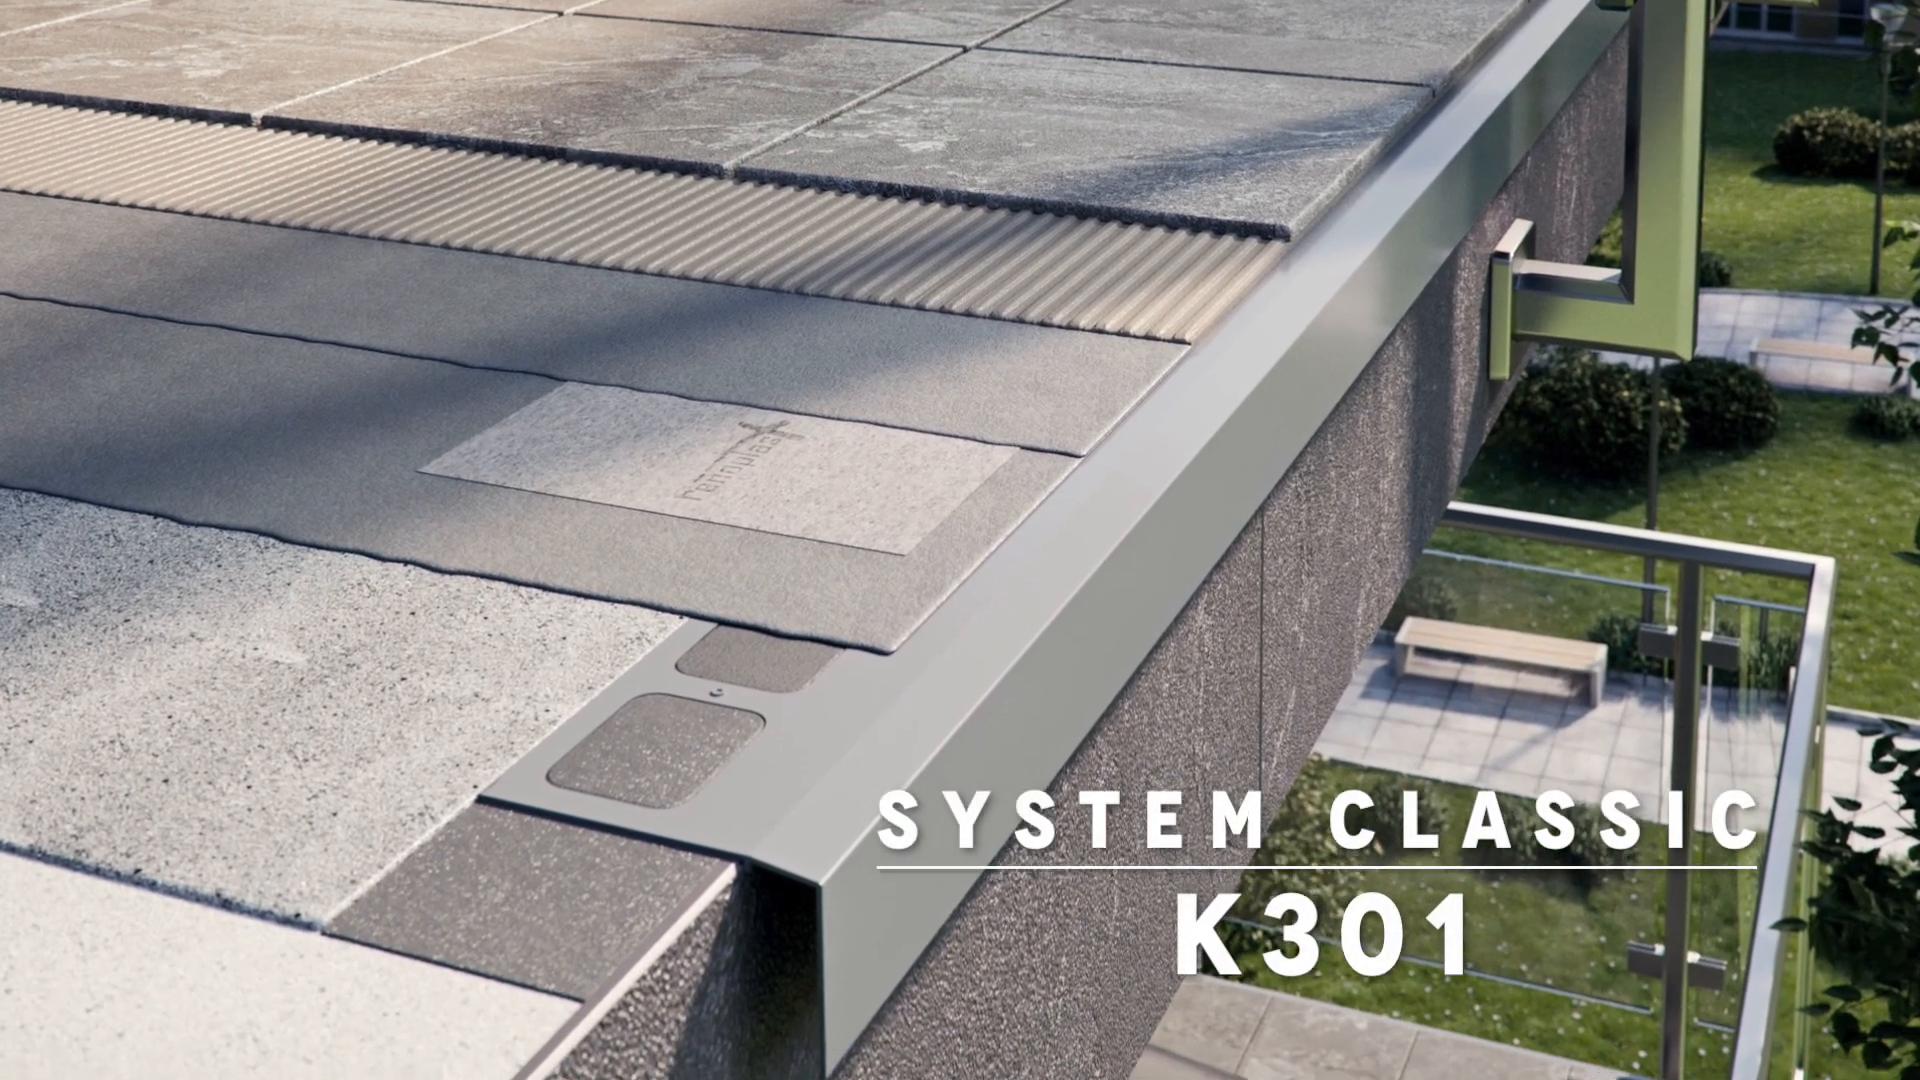 K301 Classic System